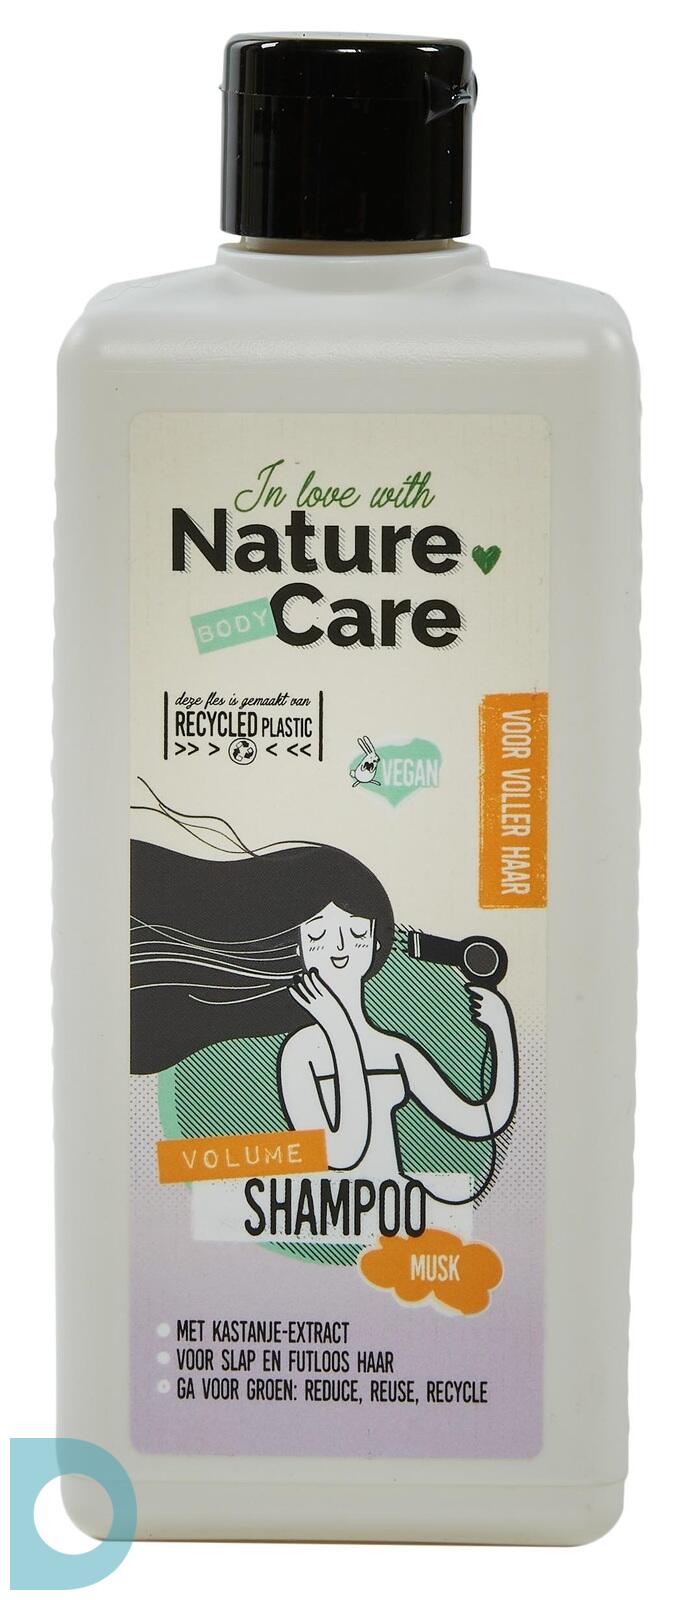 Nature Care Shampoo kopen bij De Online Drogist